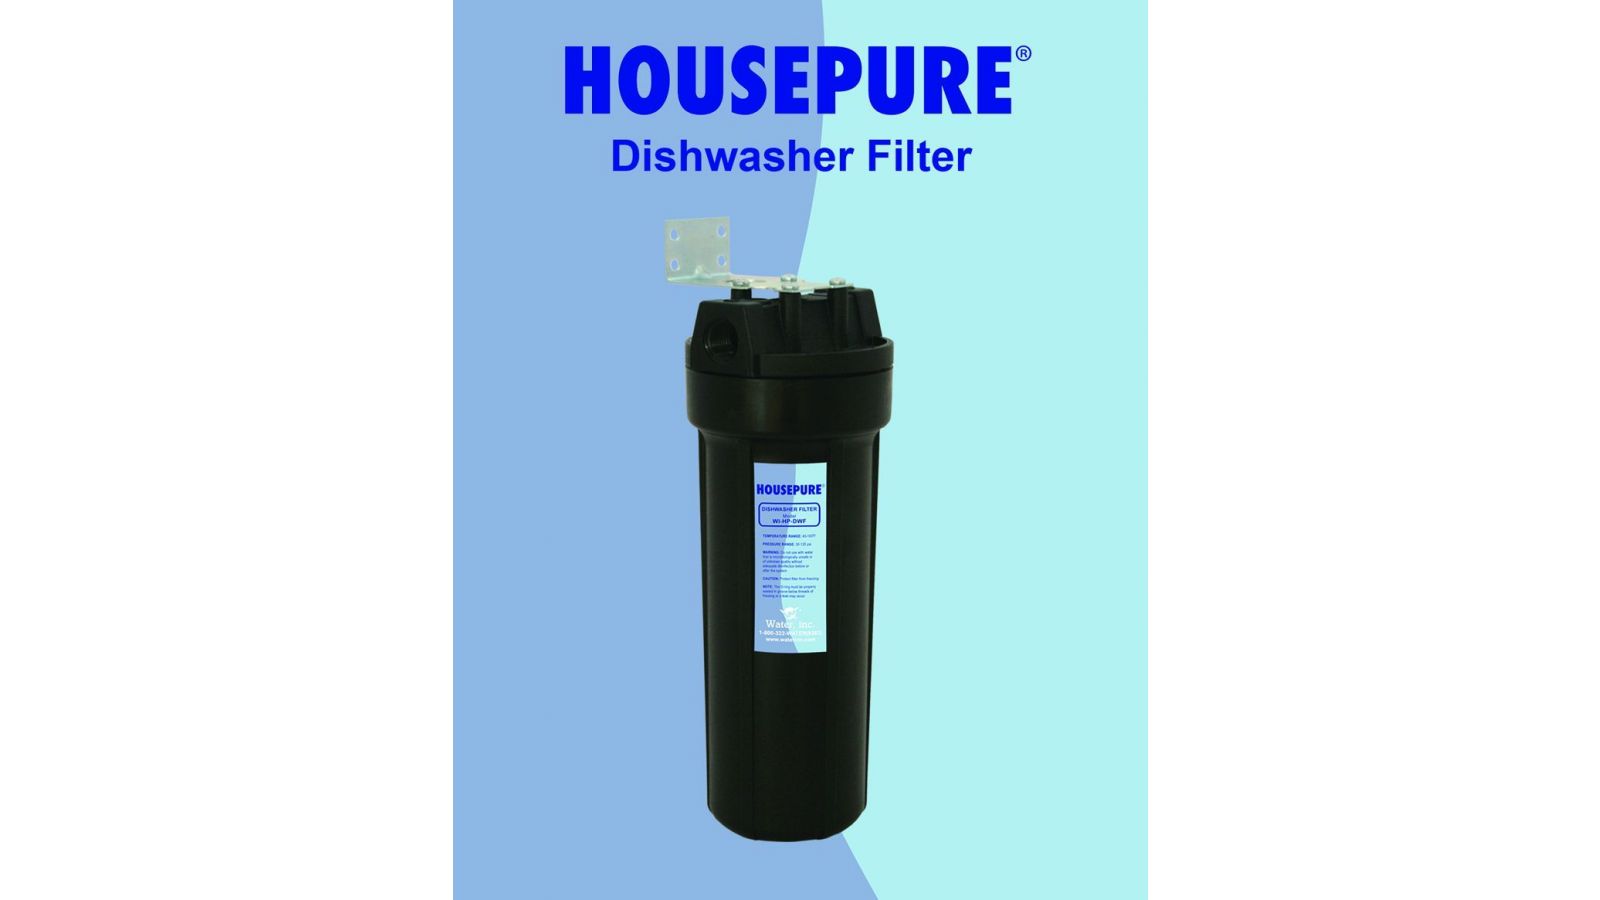 Housepure Dishwasher Filter